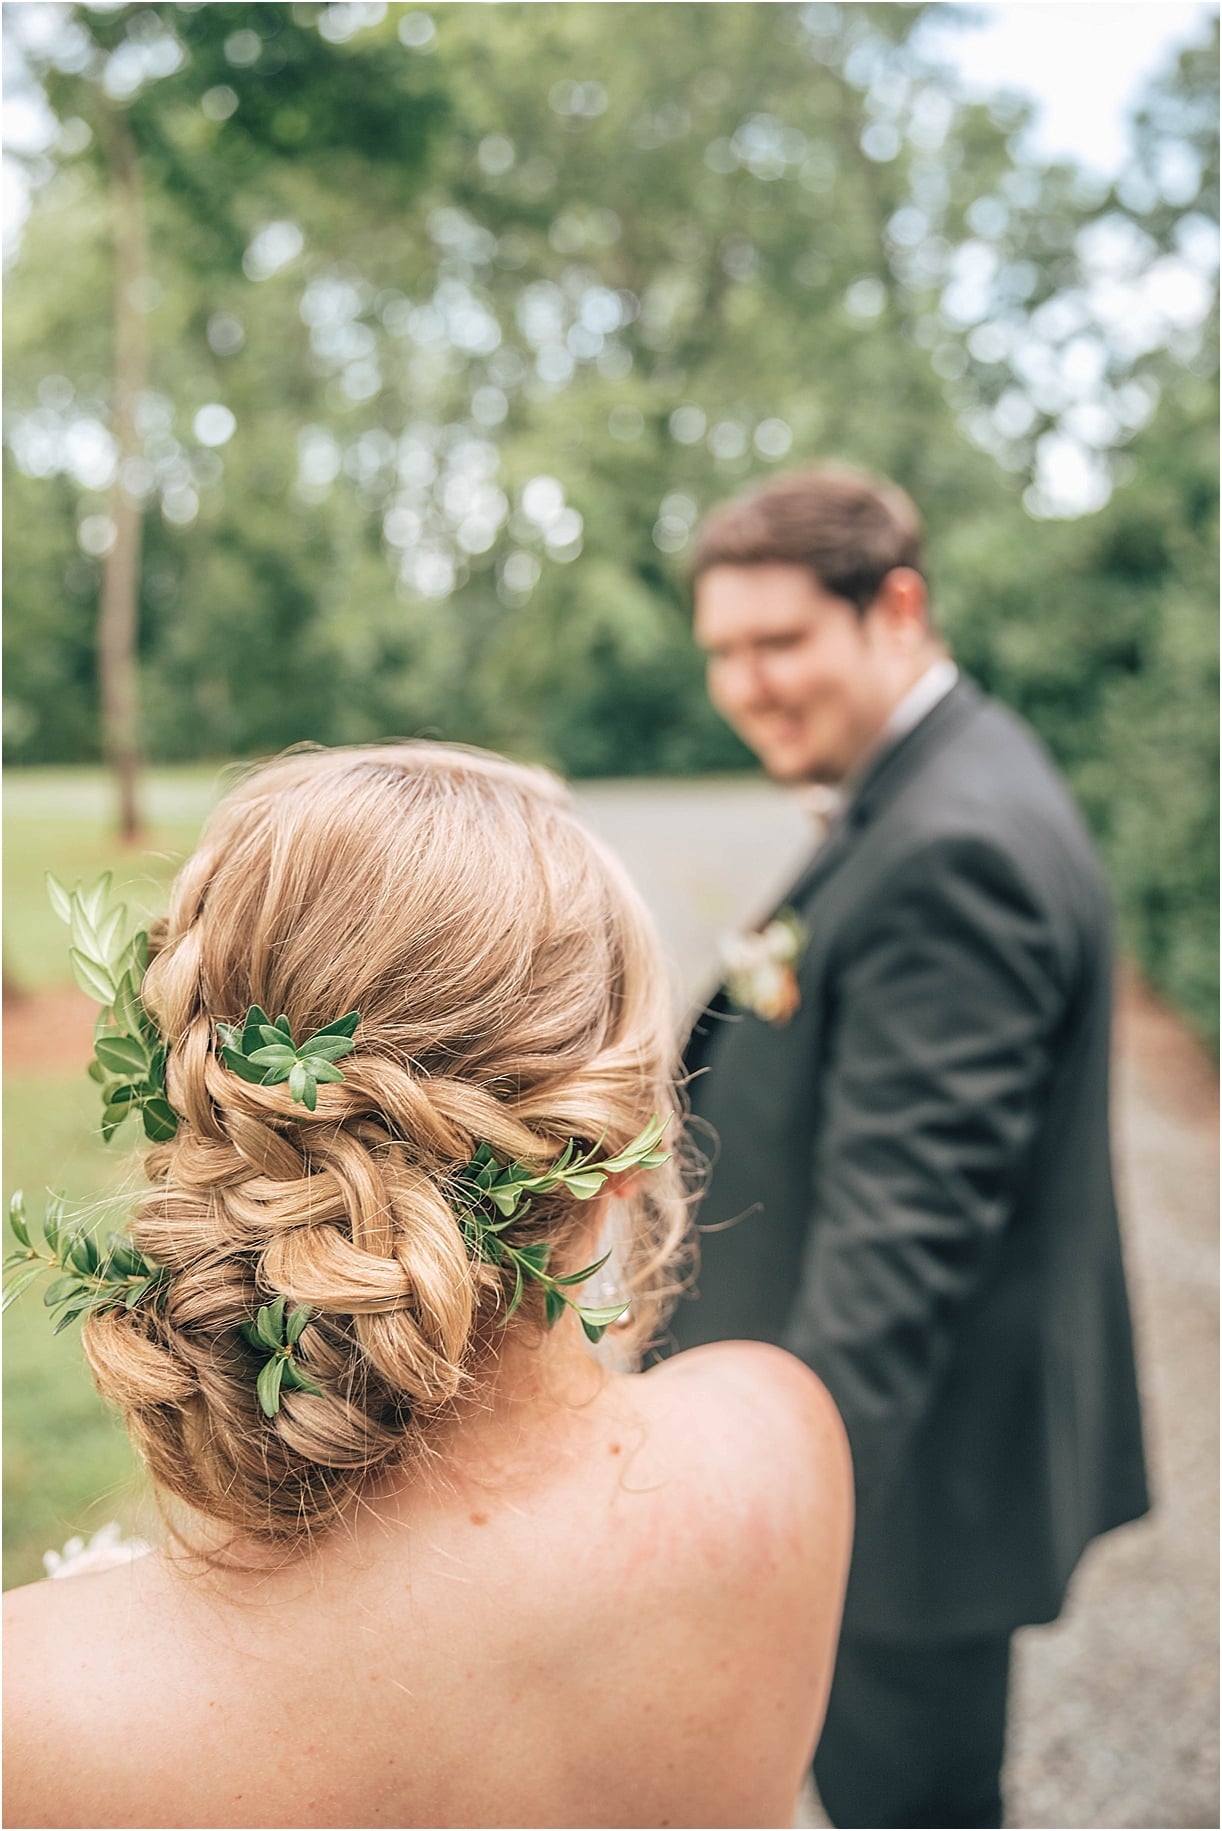 An Intimate Secret Garden Wedding in Virginia | Hill City Bride Virginia Wedding Inspiration Blog Braids Updo 